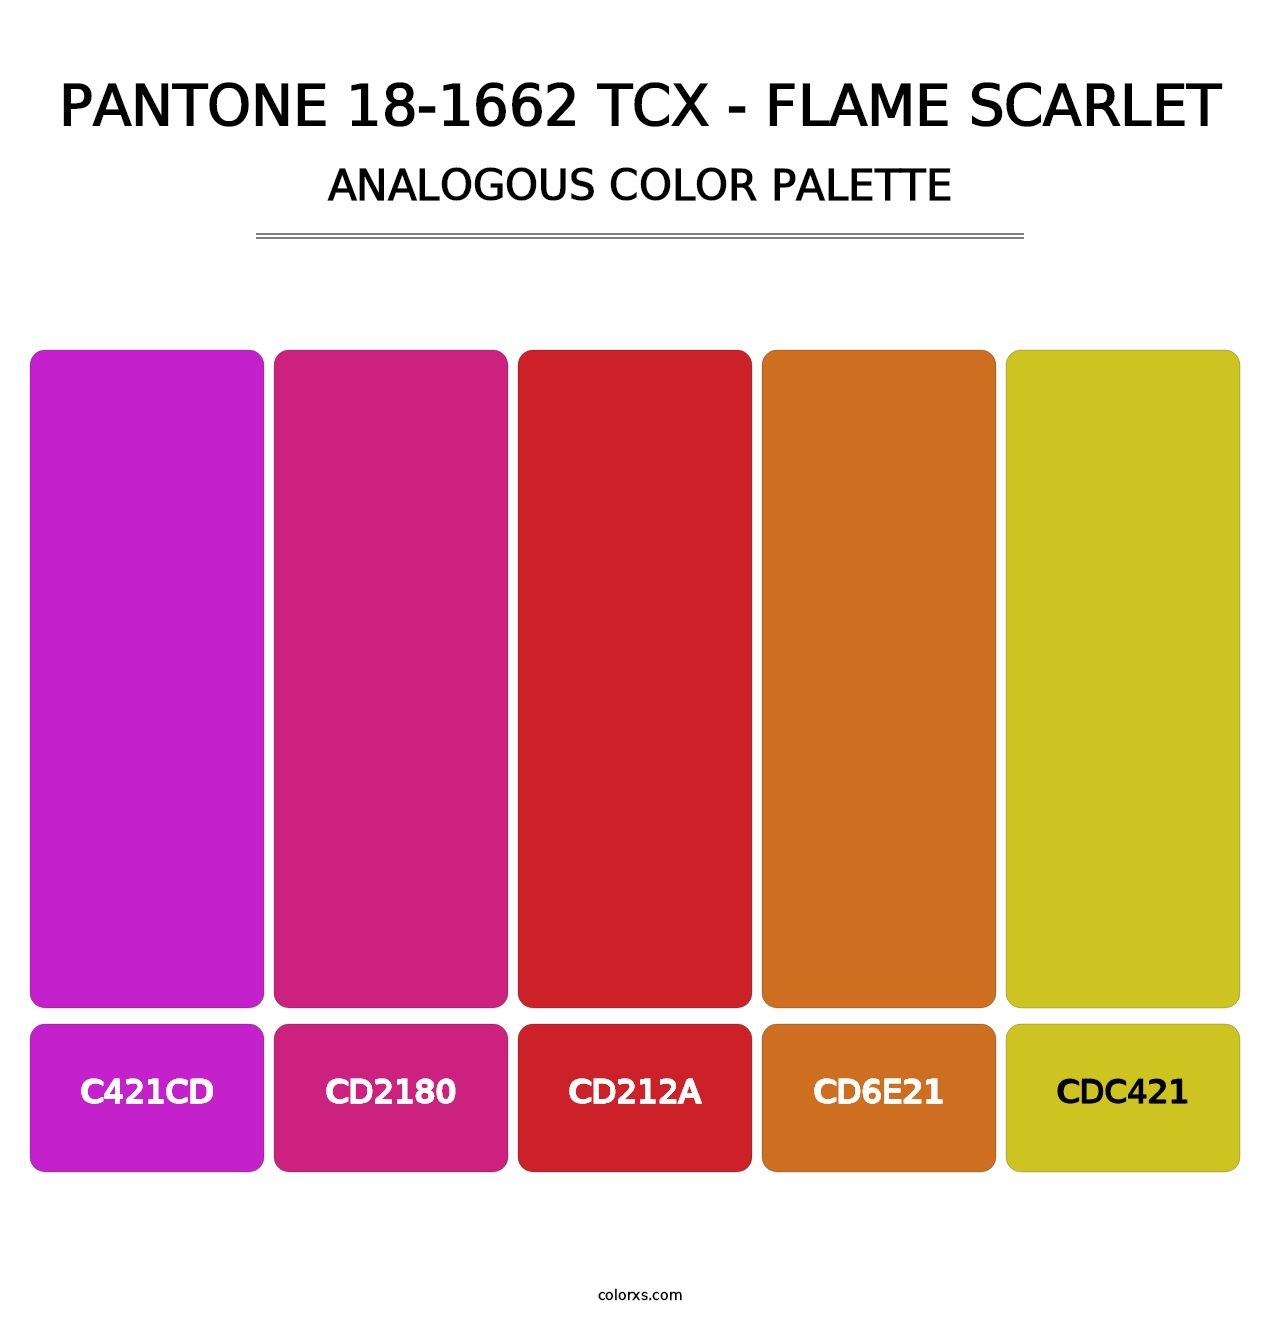 PANTONE 18-1662 TCX - Flame Scarlet - Analogous Color Palette